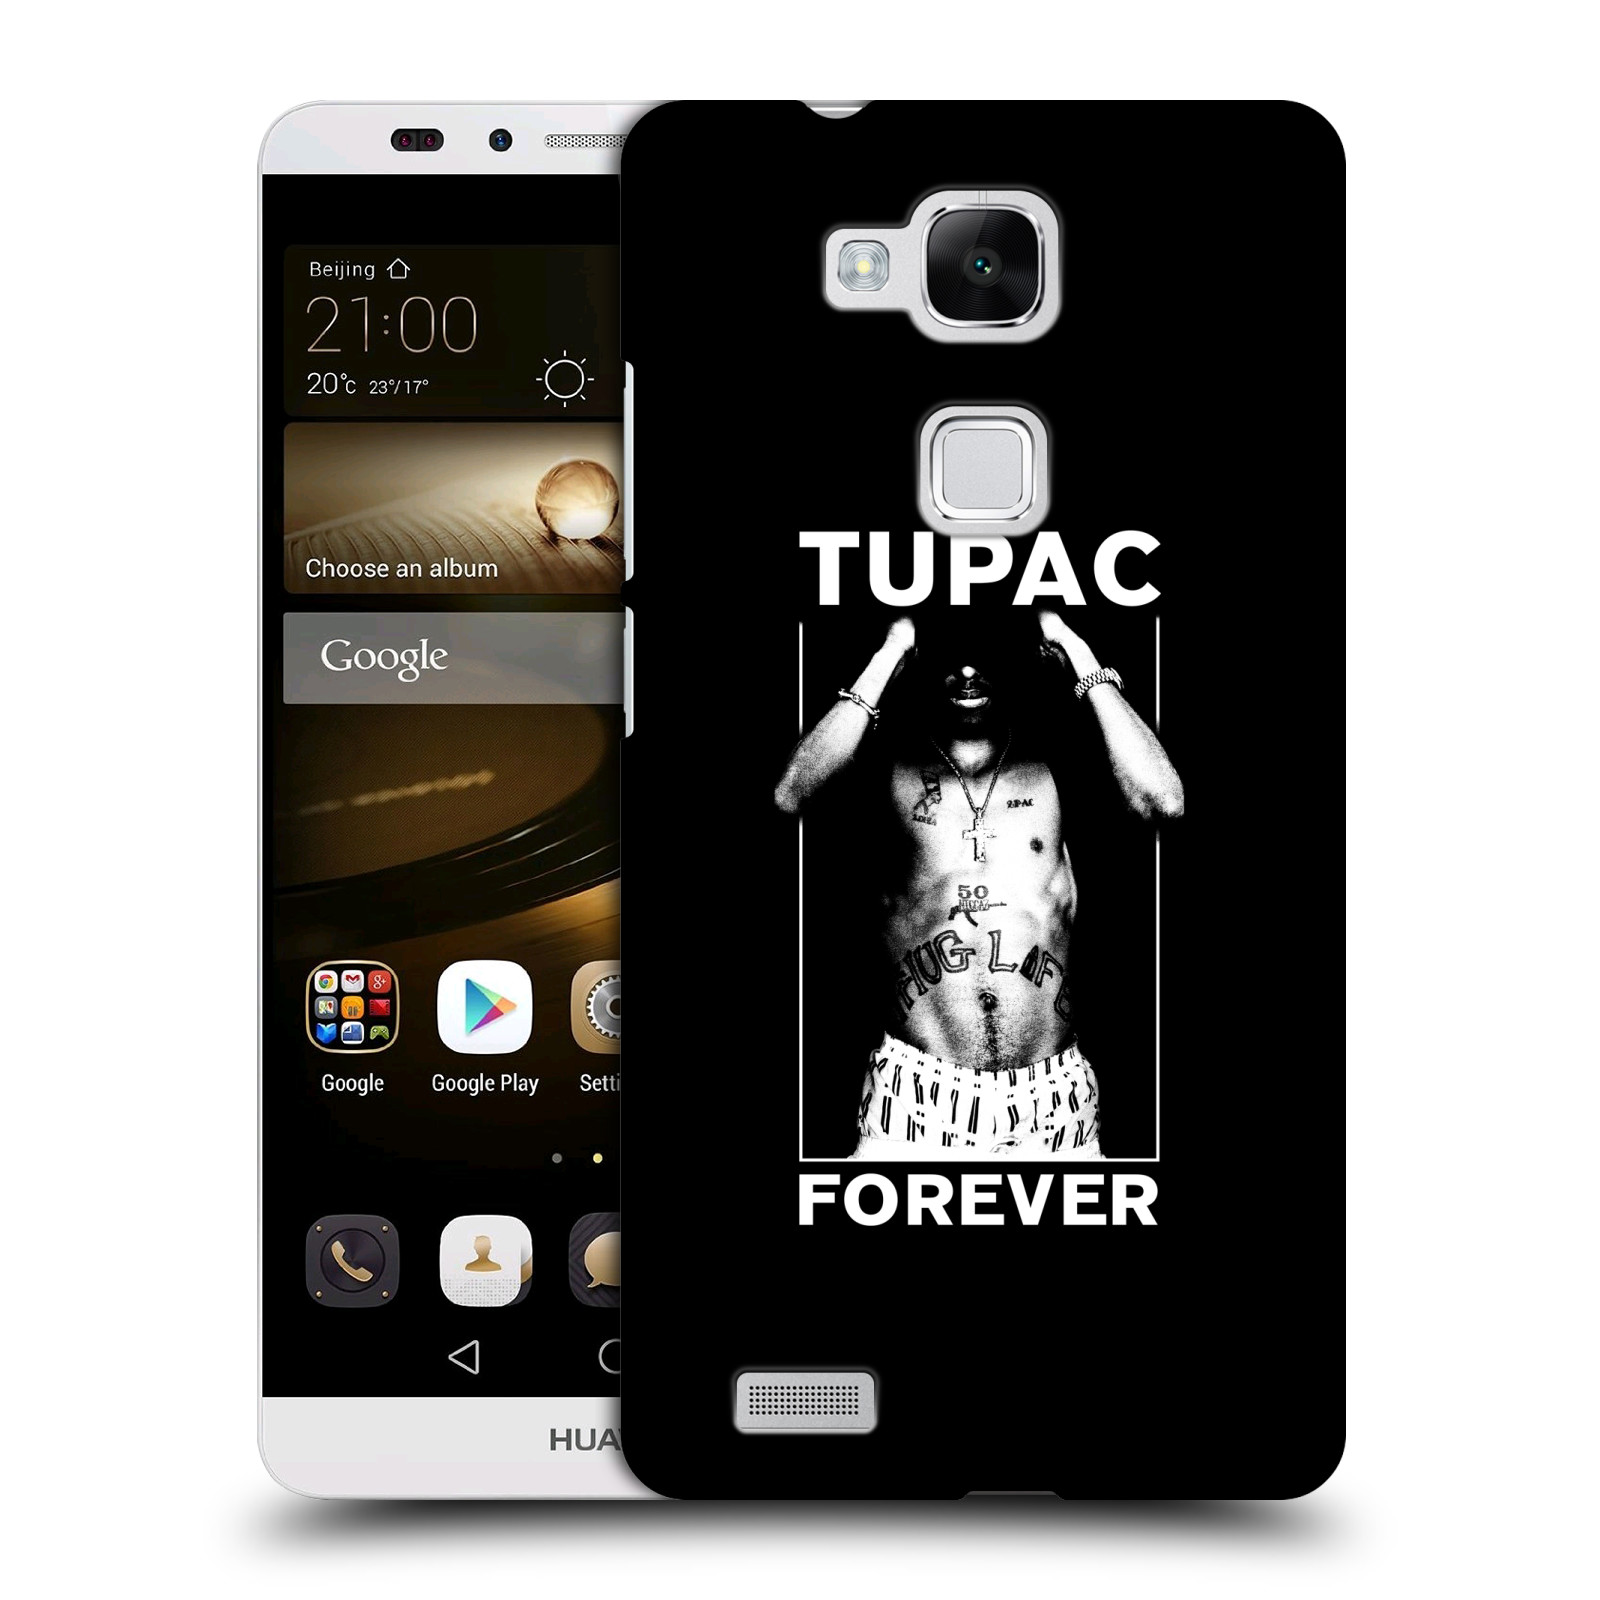 HEAD CASE plastový obal na mobil Huawei Mate 7 Zpěvák rapper Tupac Shakur 2Pac bílý popisek FOREVER